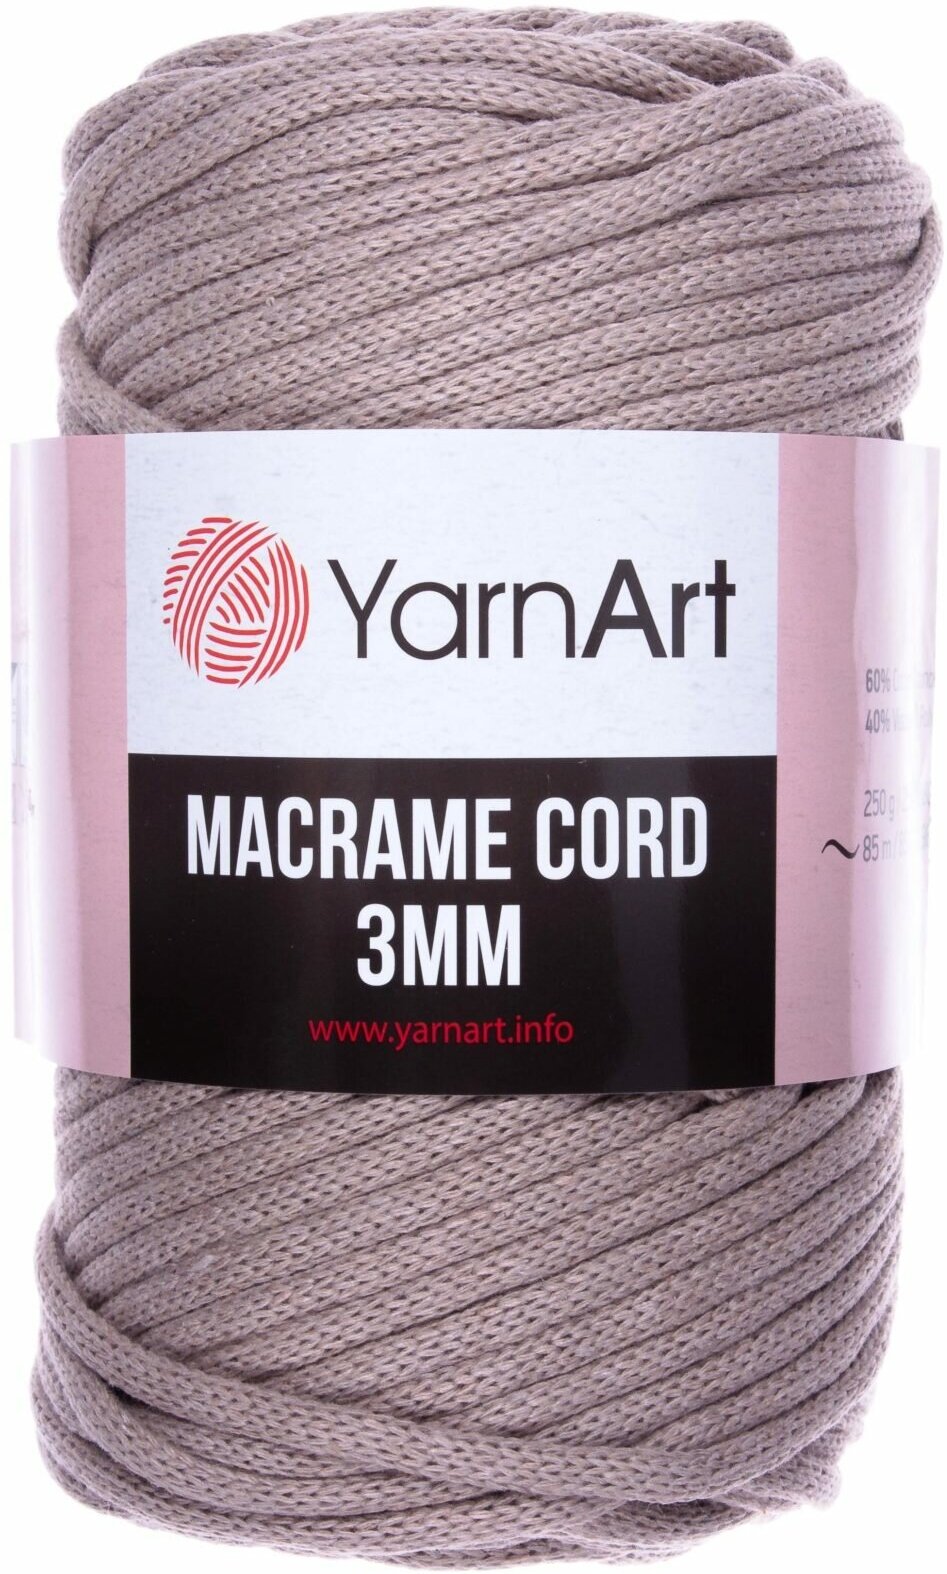 Пряжа YarnArt Macrame cord 3mm 60%хлопок/40%полиэстер/вискоза 85м 250г